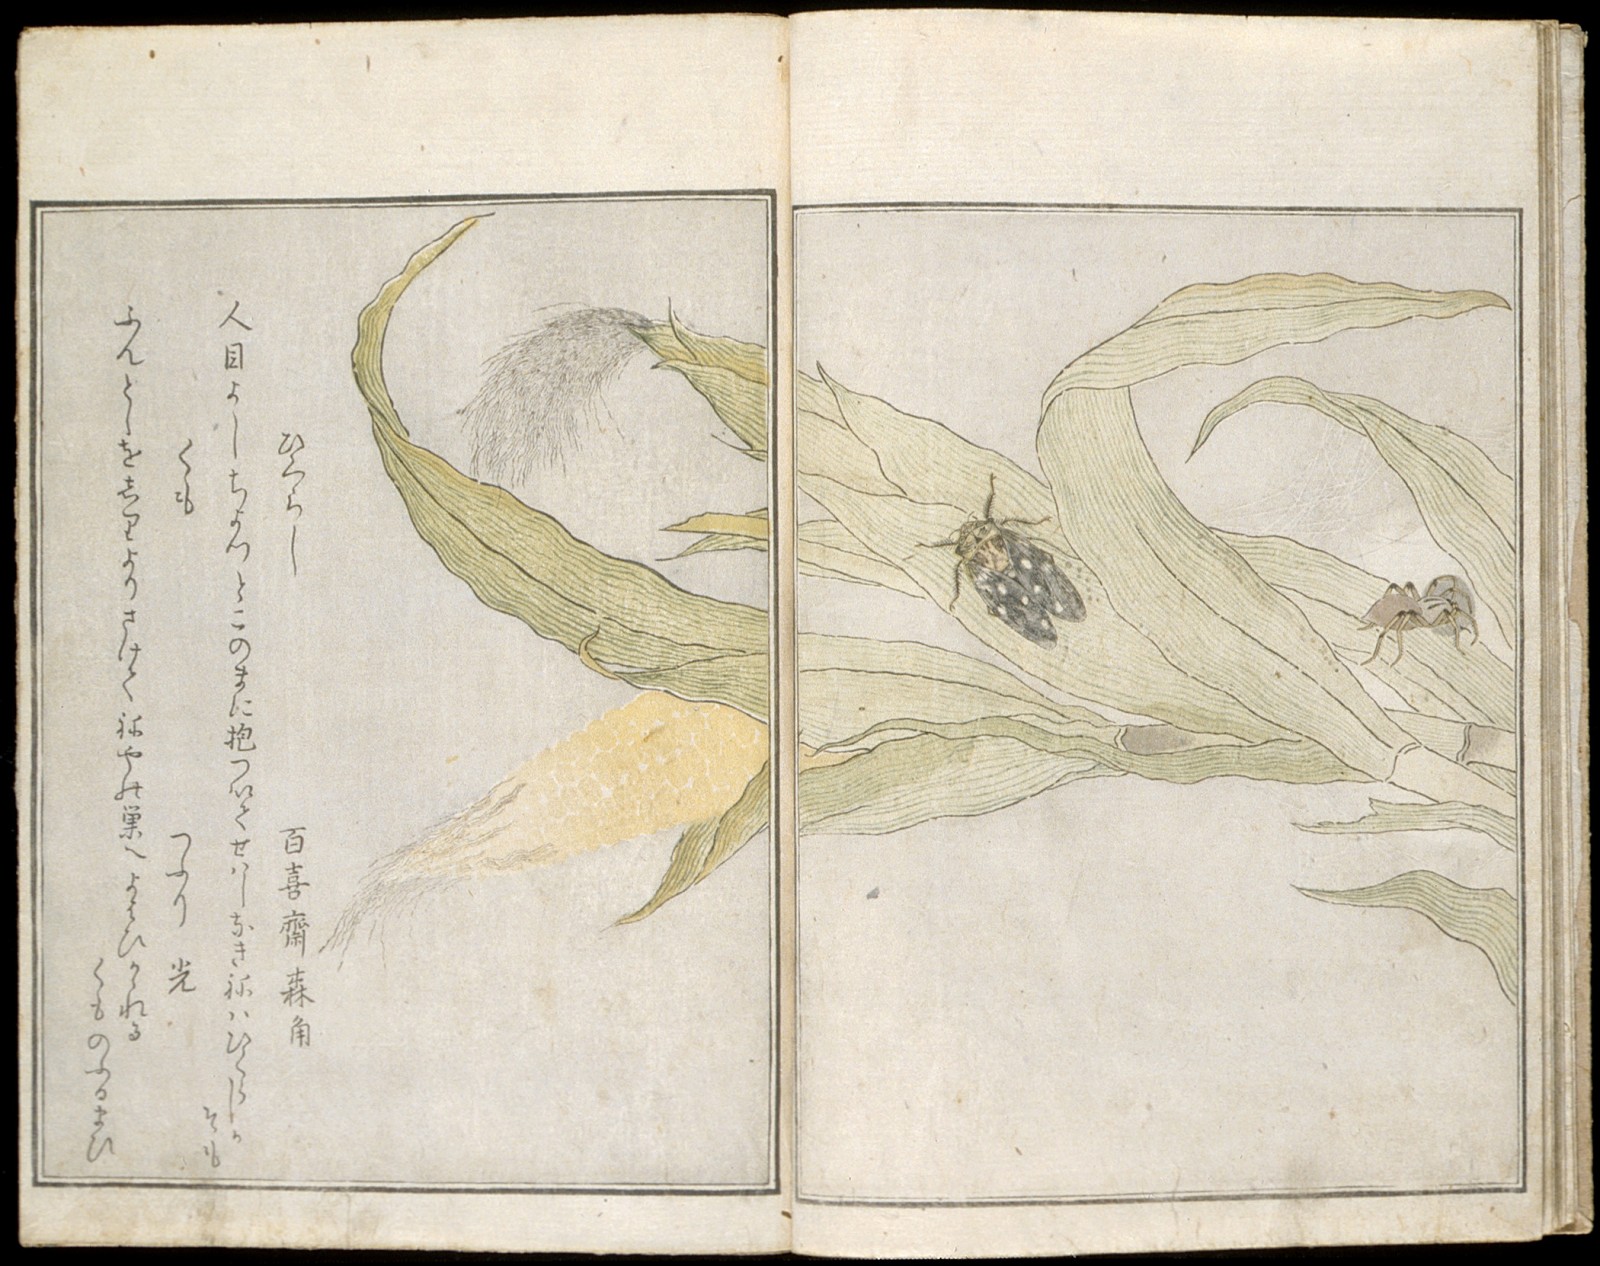 Image: Kitagawa Utamaro, Picture Book of Selected Insects, Japan, 1788